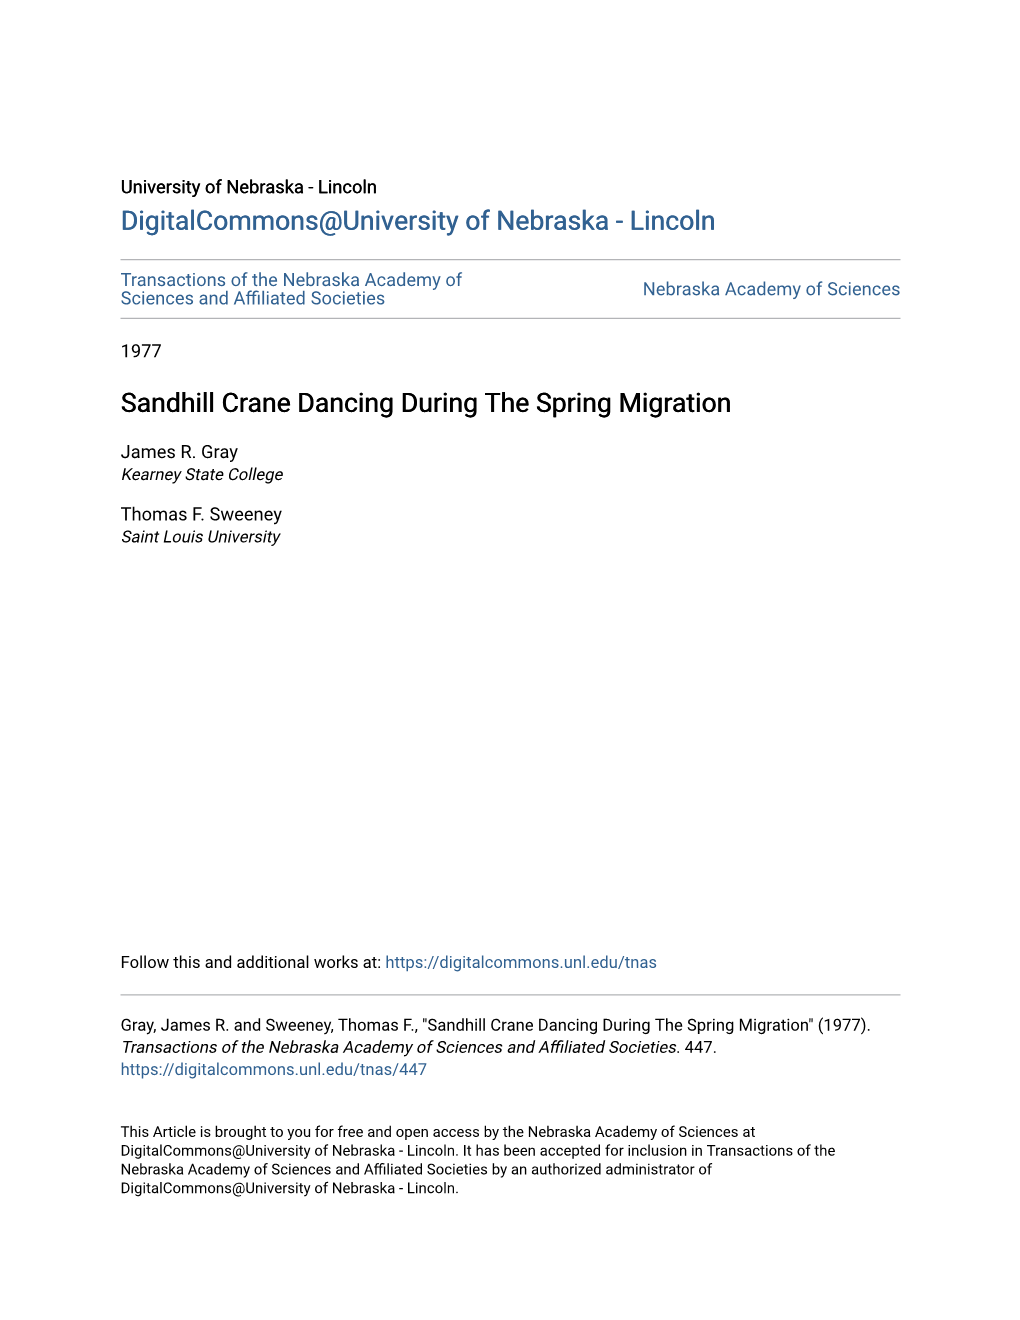 Sandhill Crane Dancing During the Spring Migration